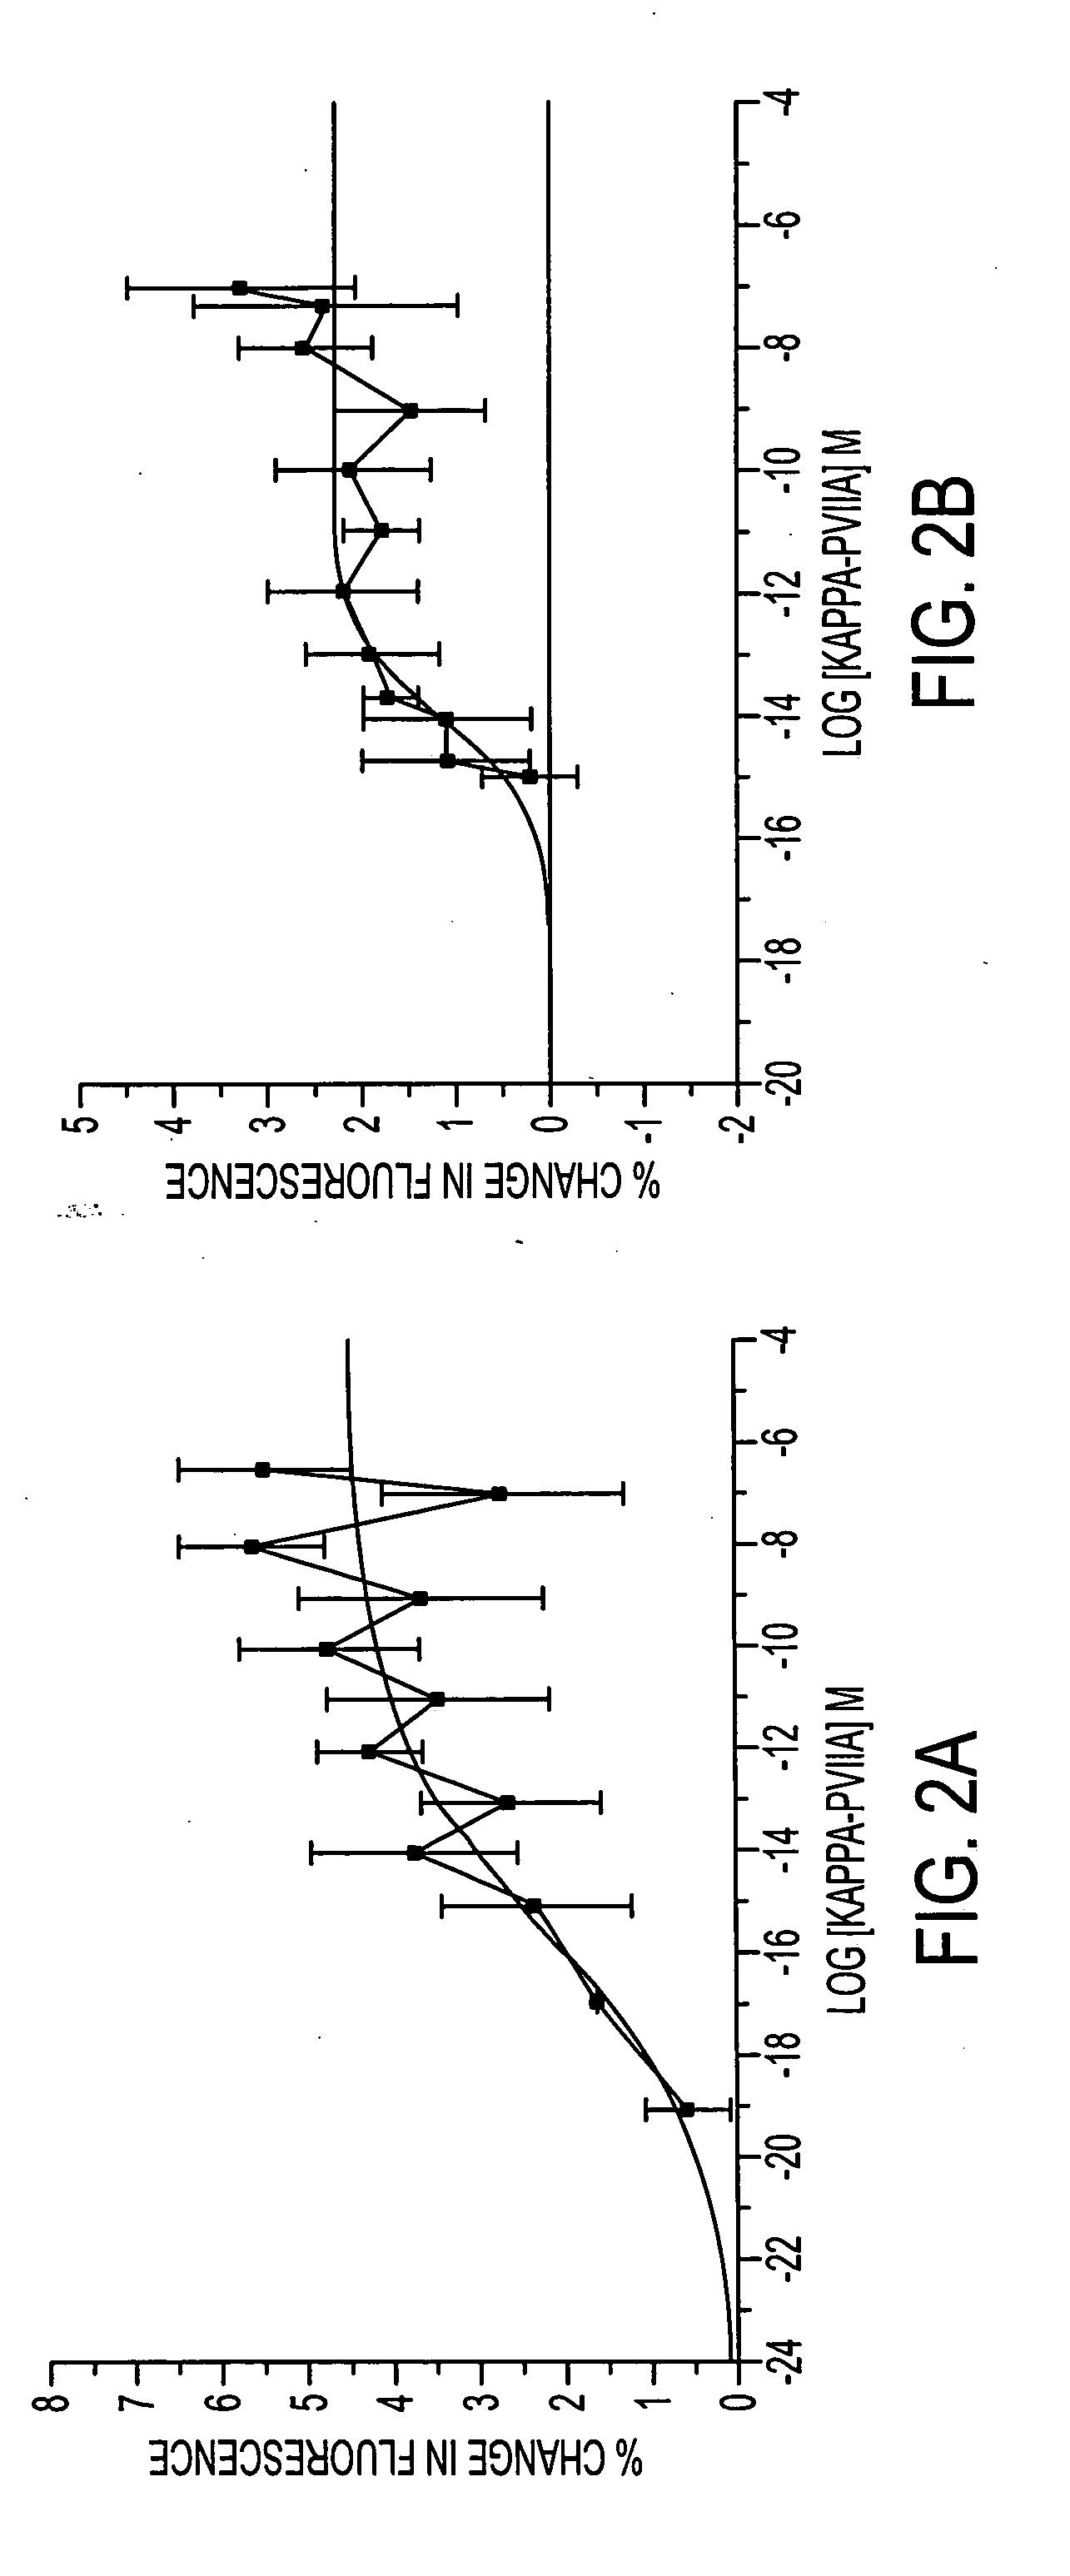 Uses of kappa-conotoxin PVIIA